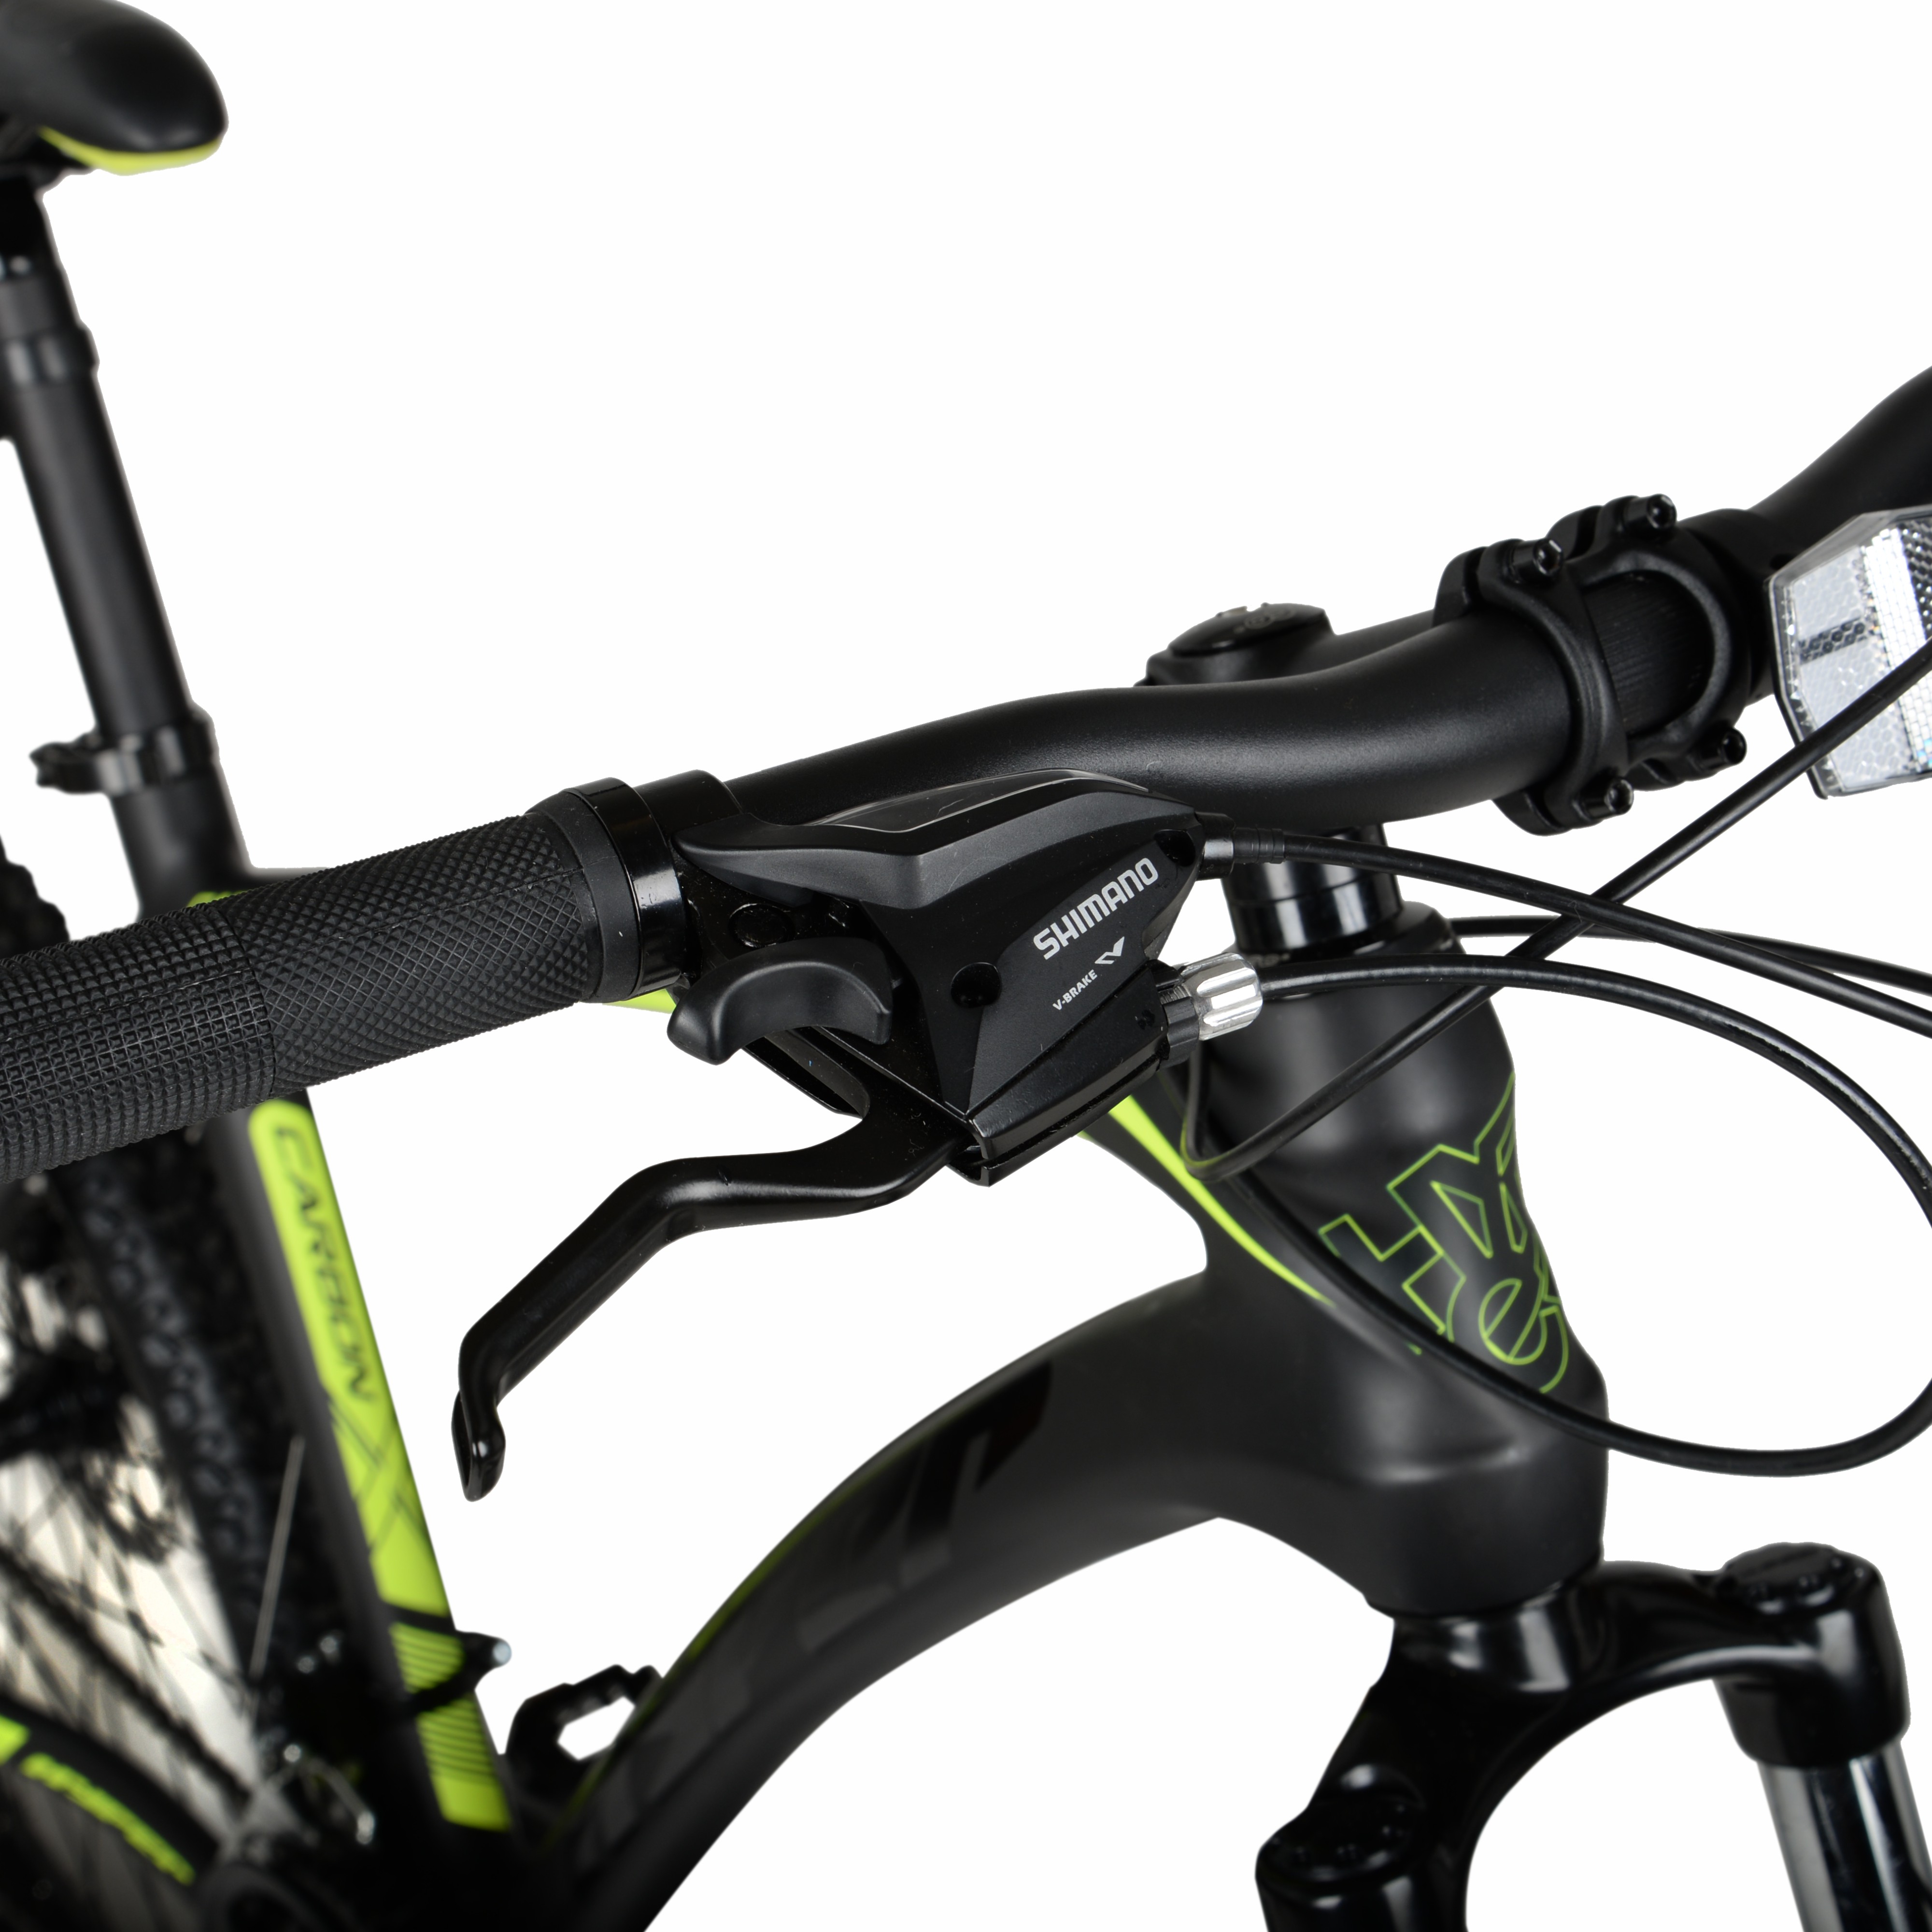 Hyper Bicycles 26" Carbon Fiber Men's Mountain Bike, Black/Green - image 2 of 12